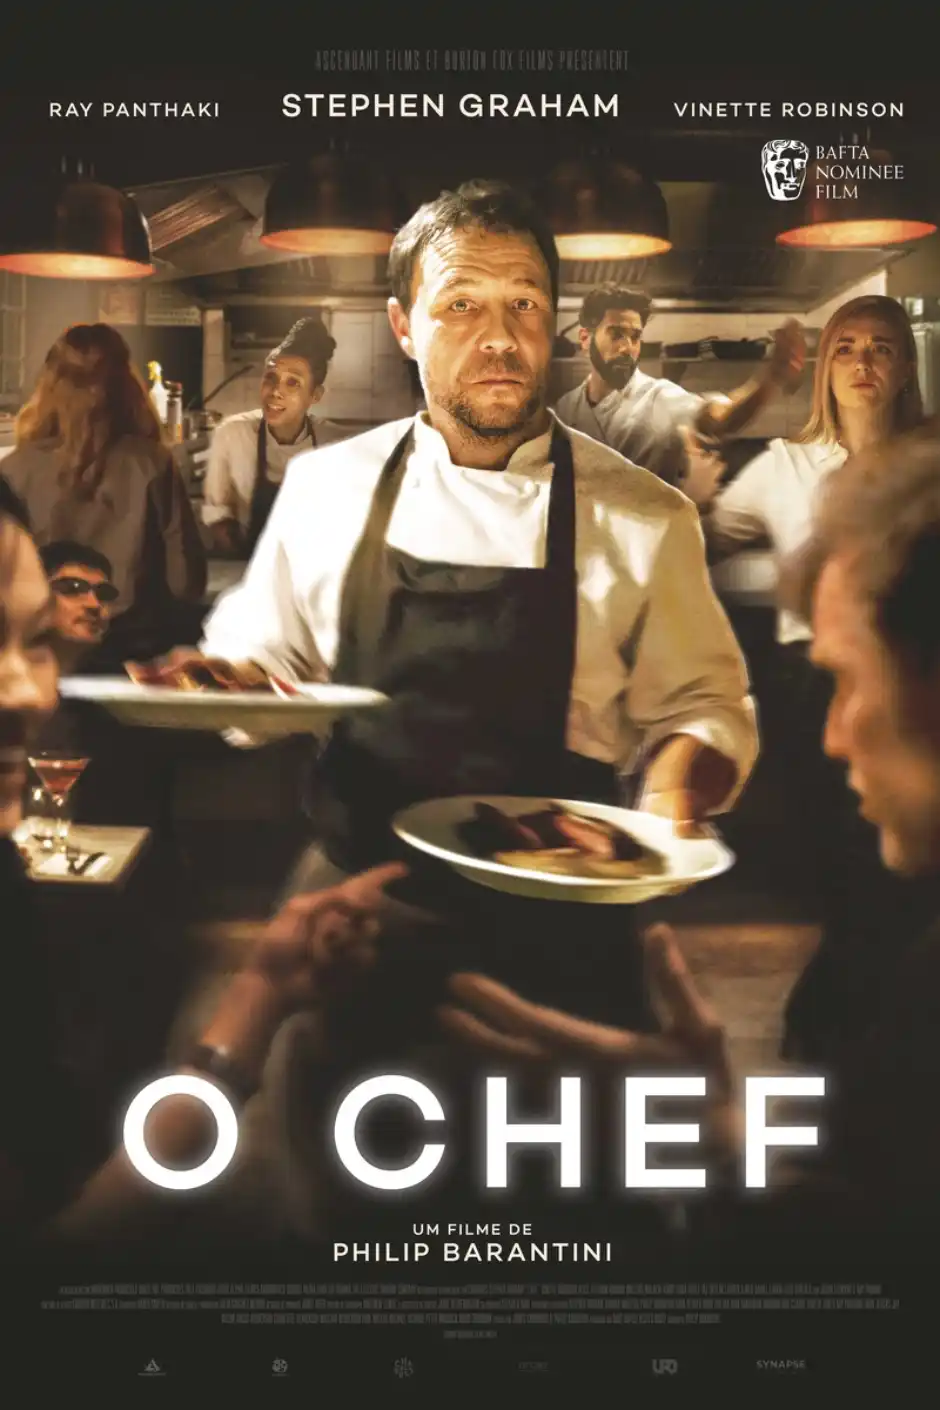 "O Chef" estreia nos cinemas brasileiros nesta quinta